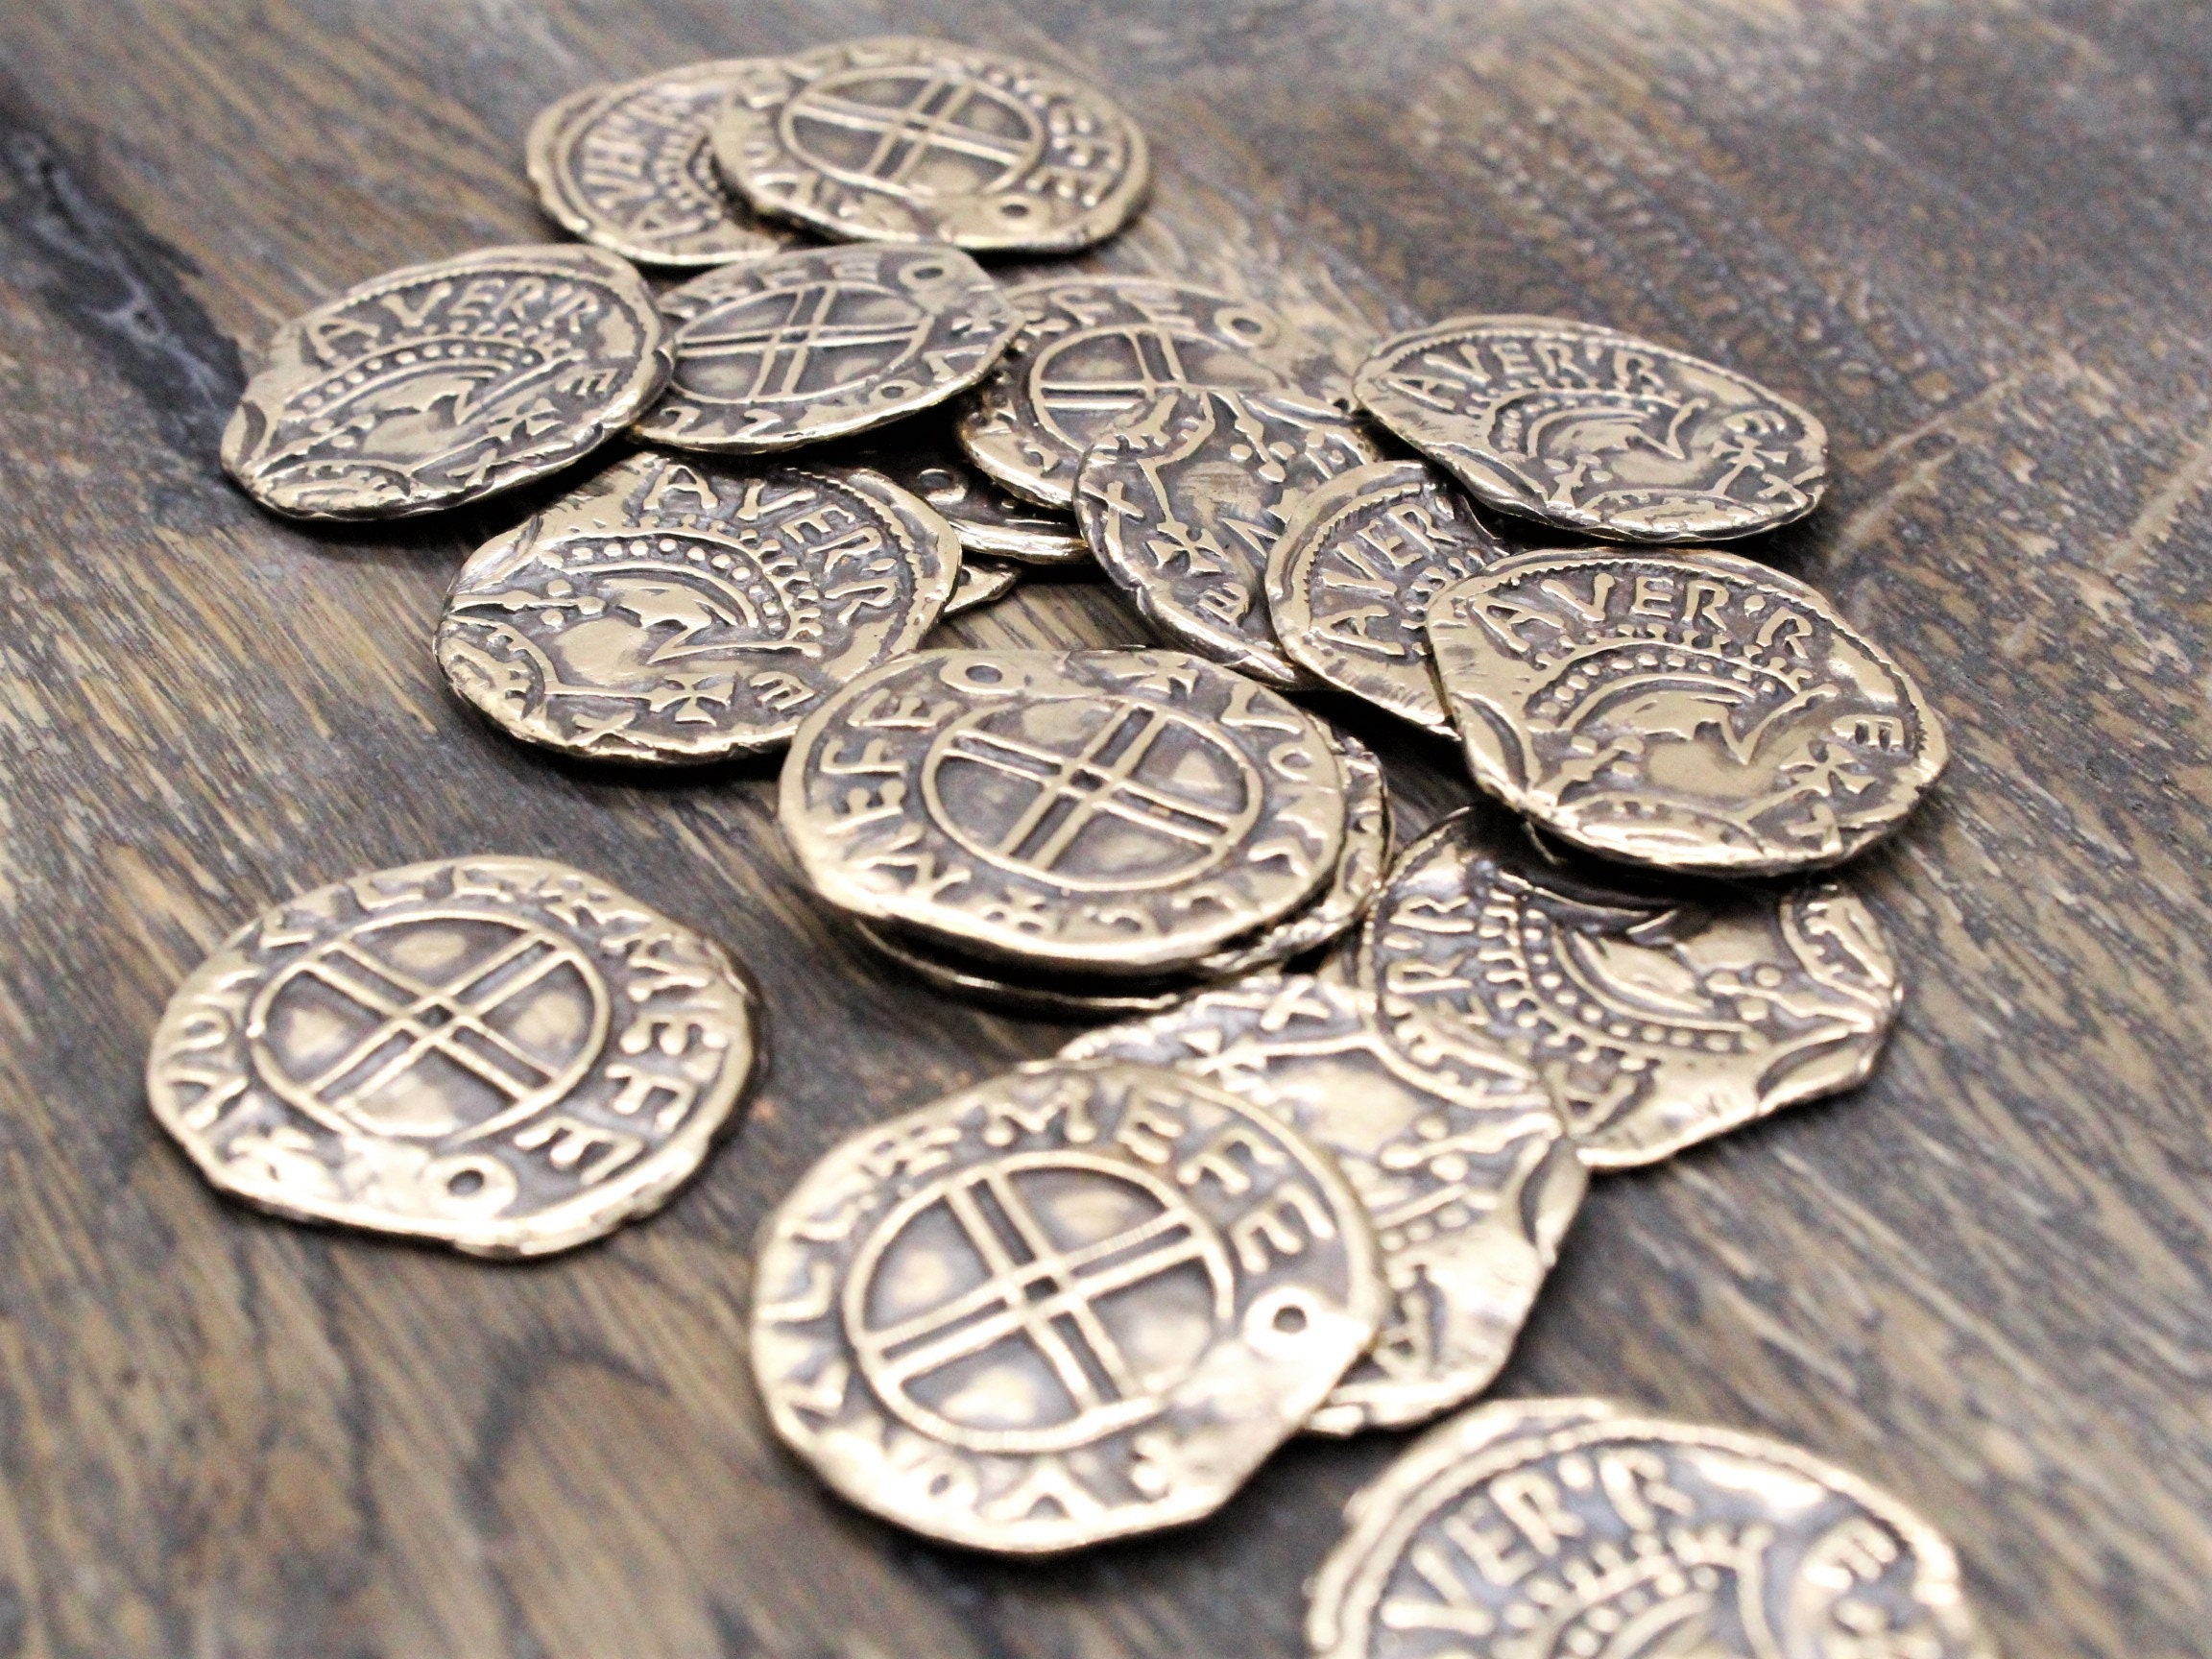 Finland 1 Markka, 1865, Old Finland Coins, Numismatic, Coin Collector, Coin  Collection, Rare Coin, Vintage Money, Old Currency, Retro Coin 